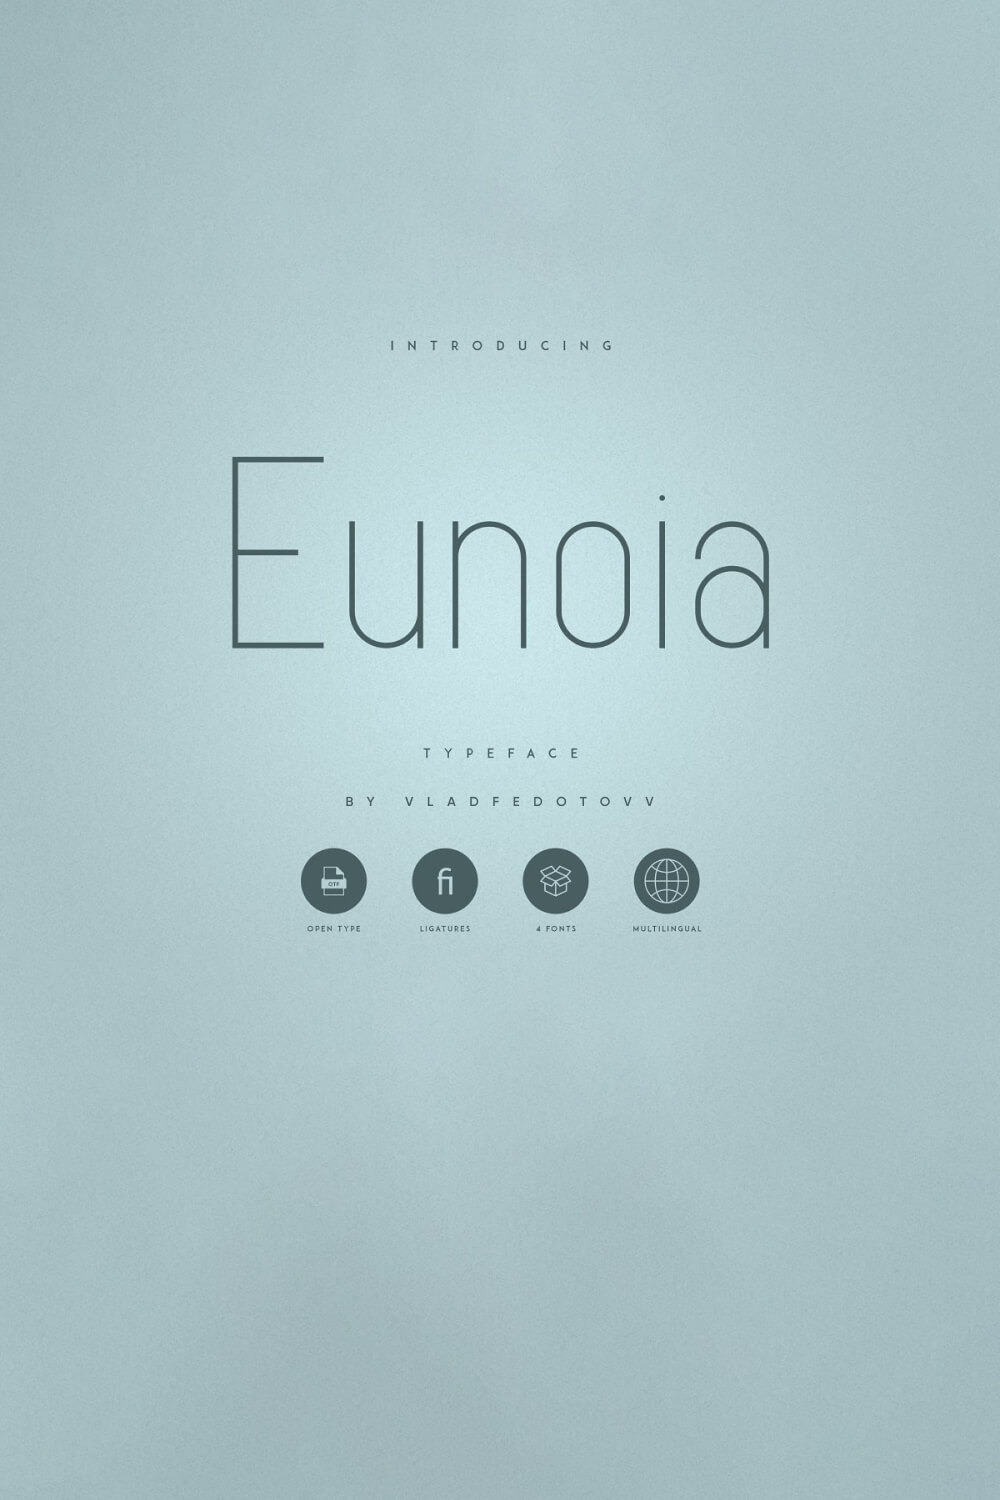 Rounded Sans Serif Font Eunoia.